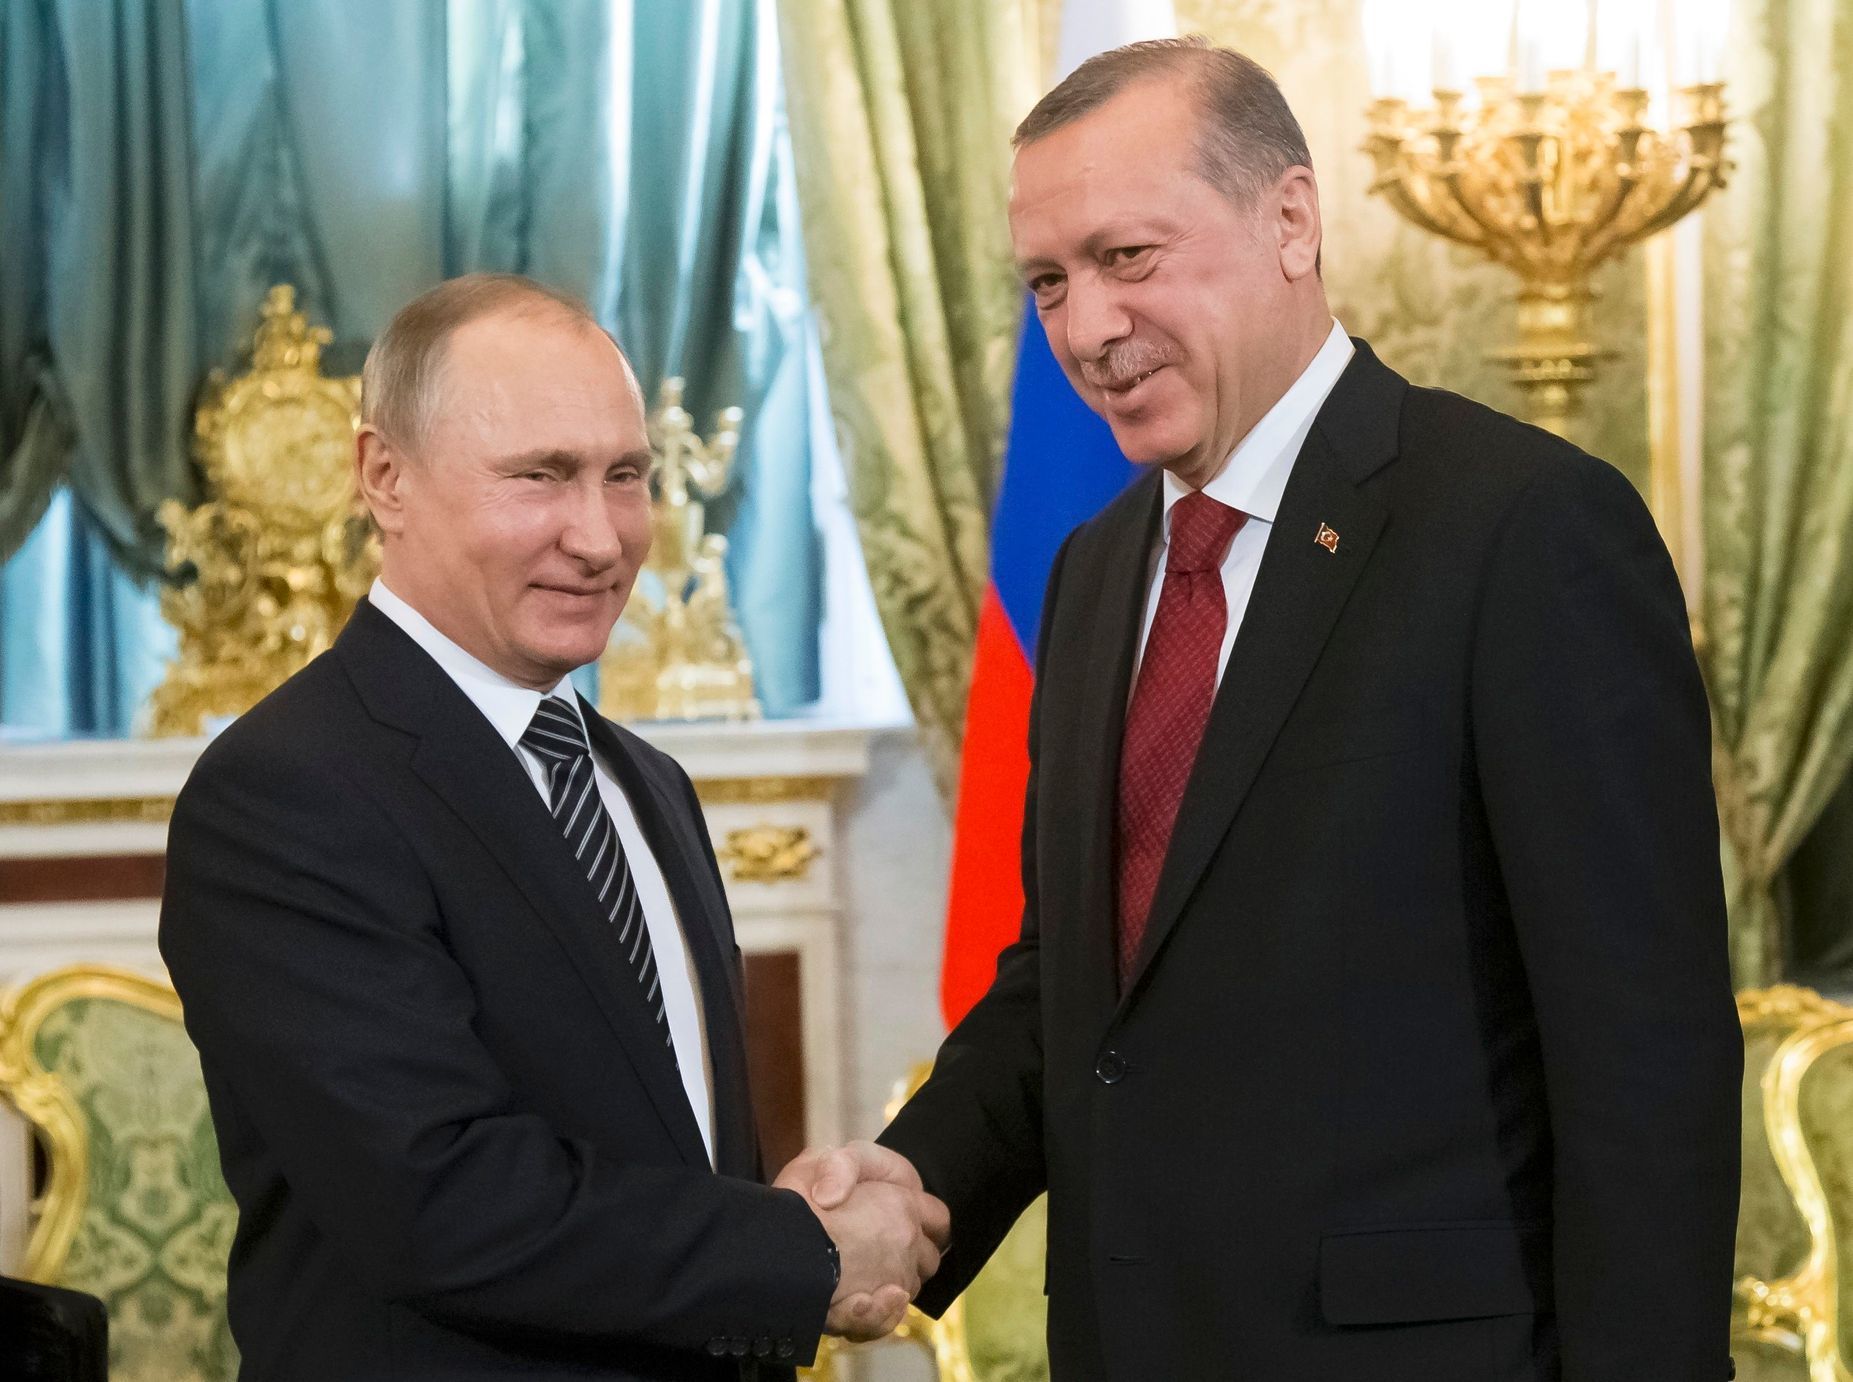 Putin a Erdogan v Moskvě